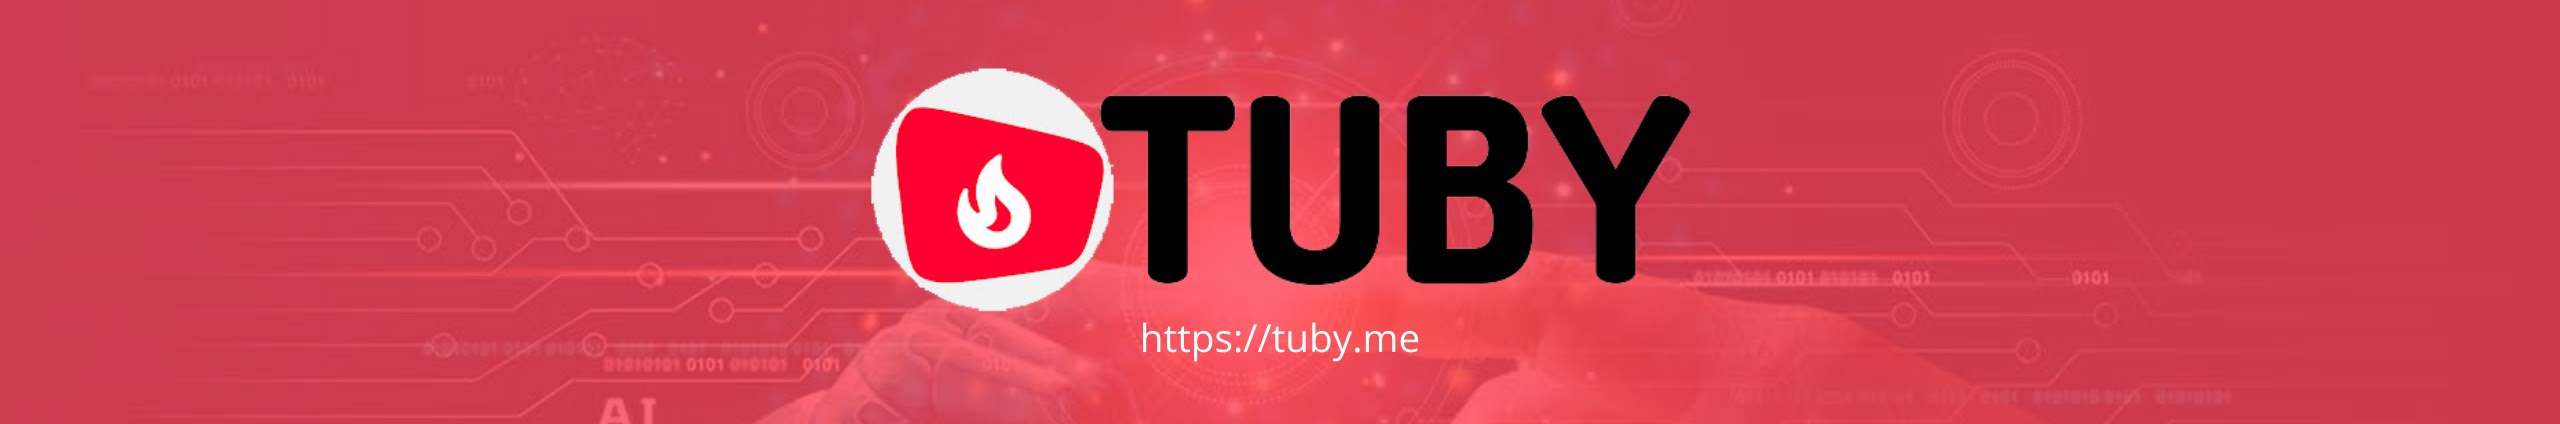 Tuby - On Tuby